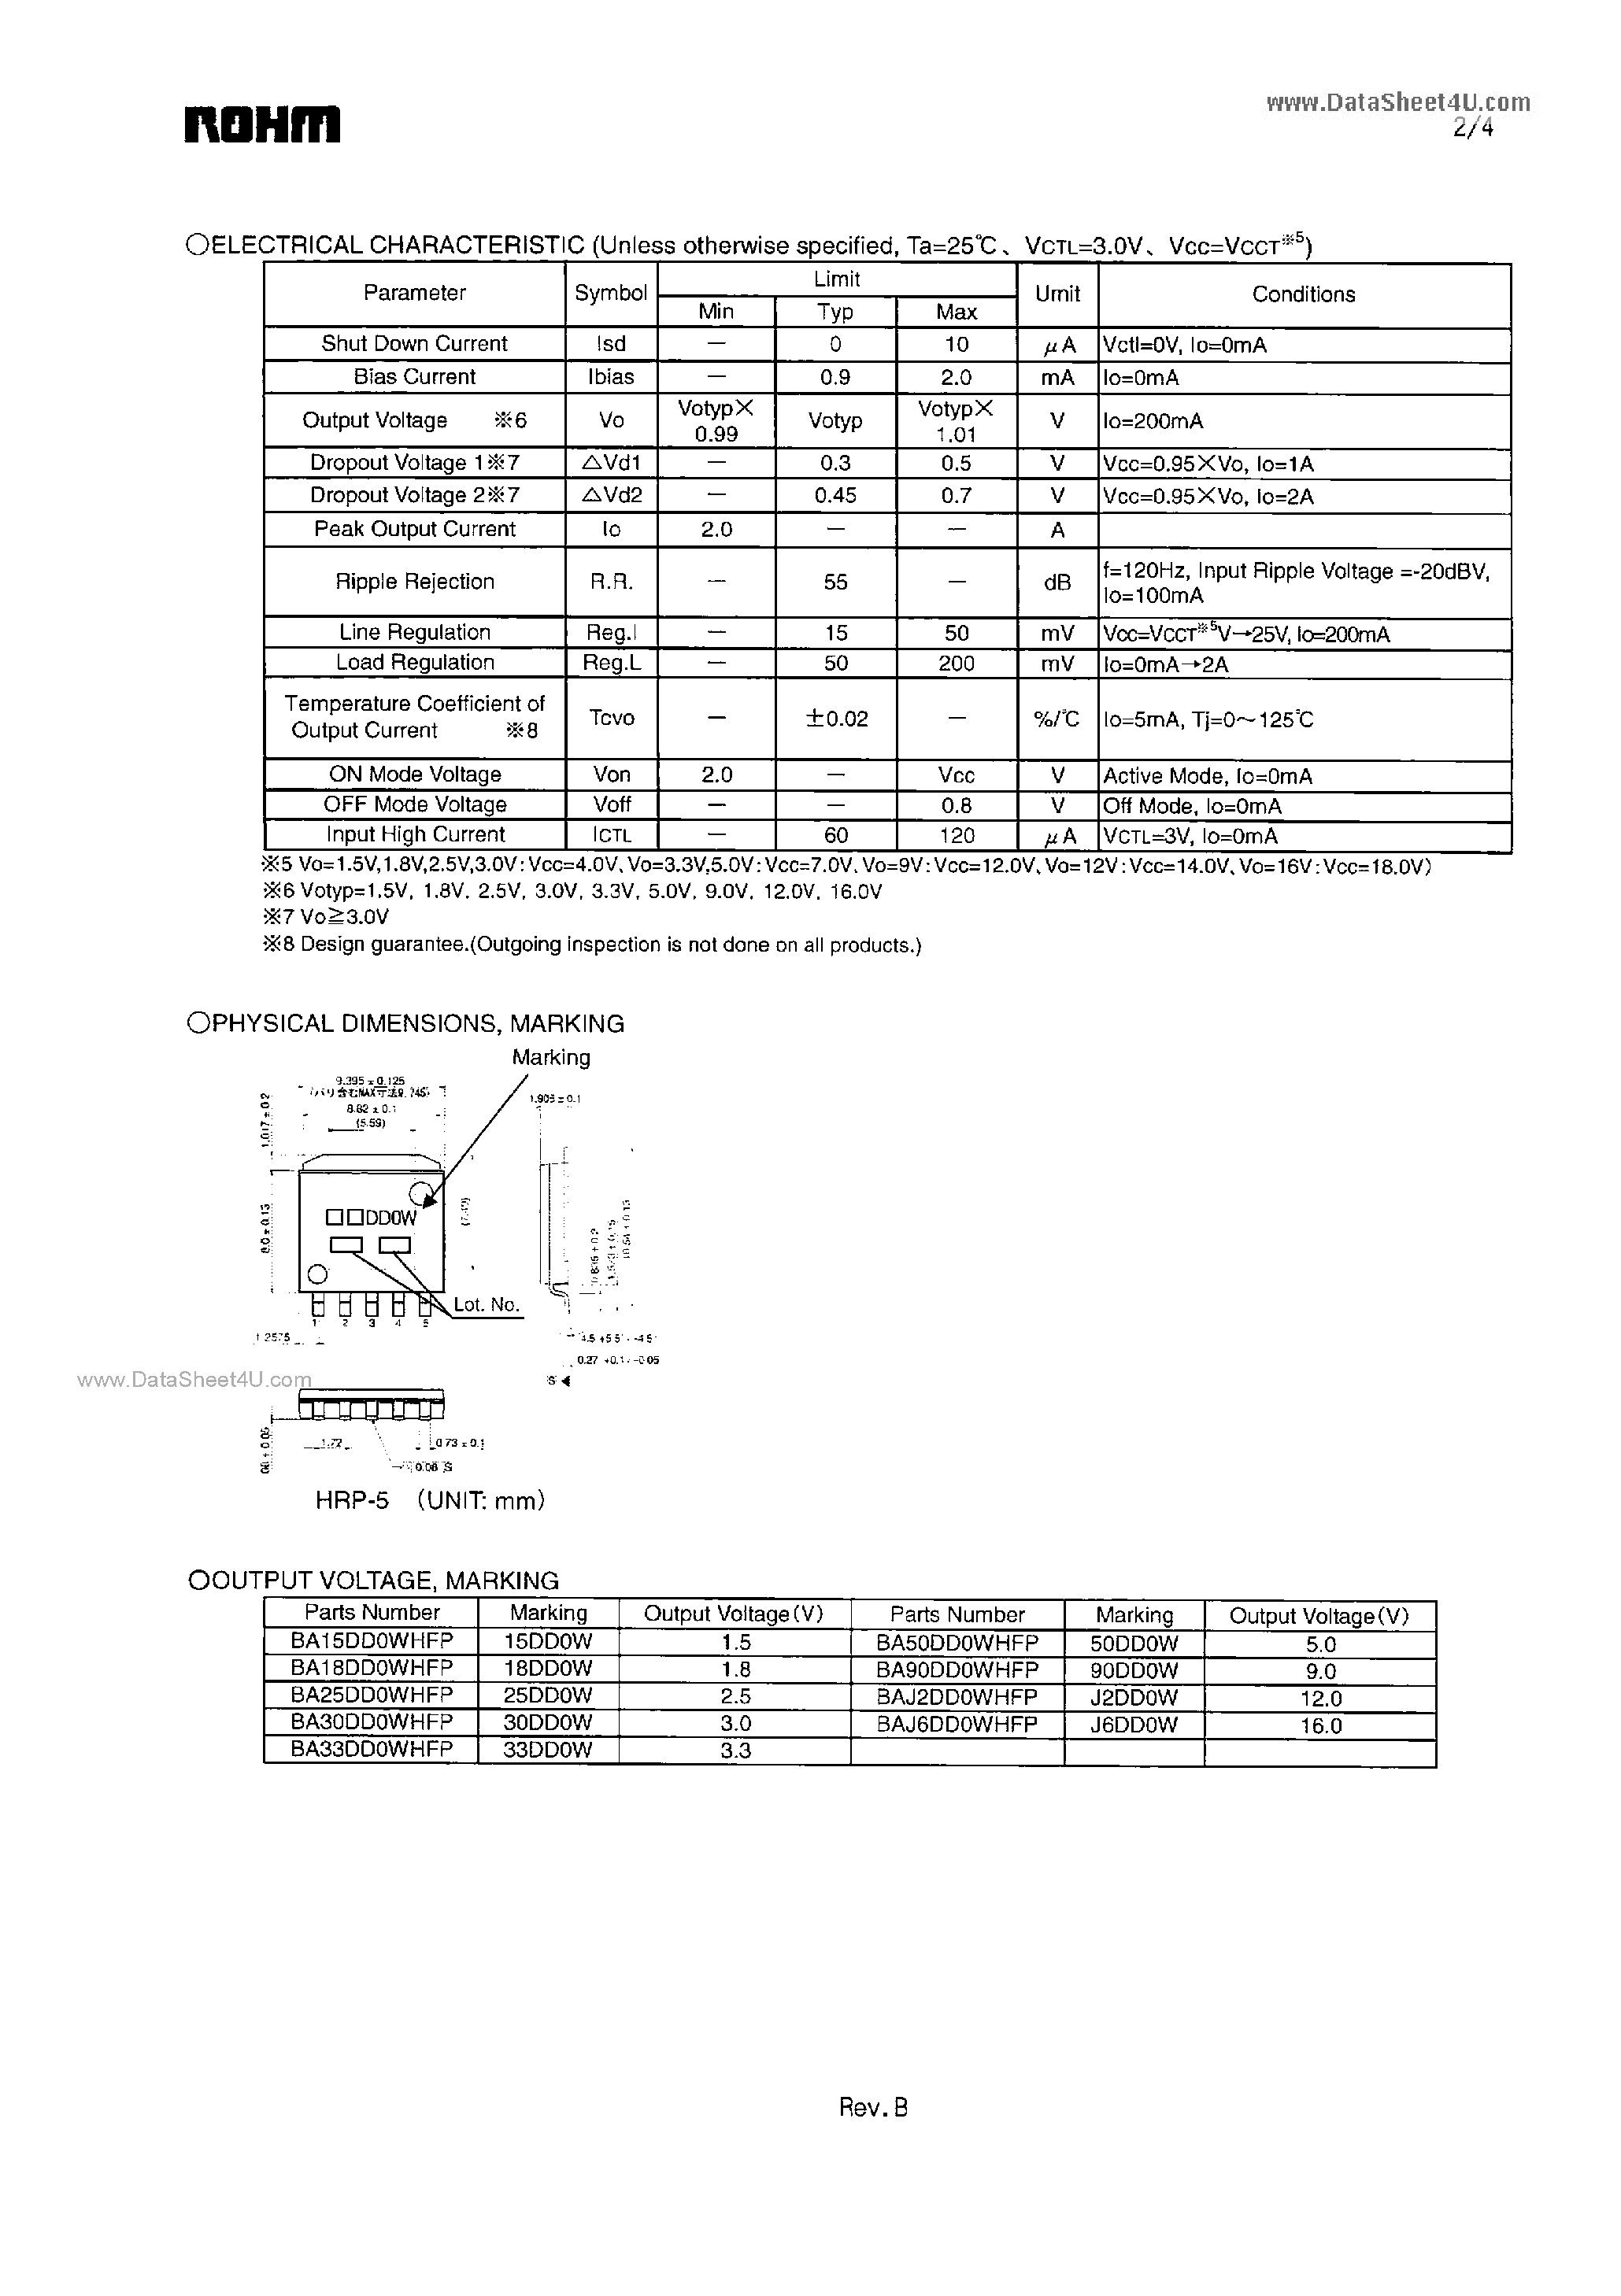 Datasheet BA25DD0WHFP - 2A Low Dropout Voltage Regulator page 2